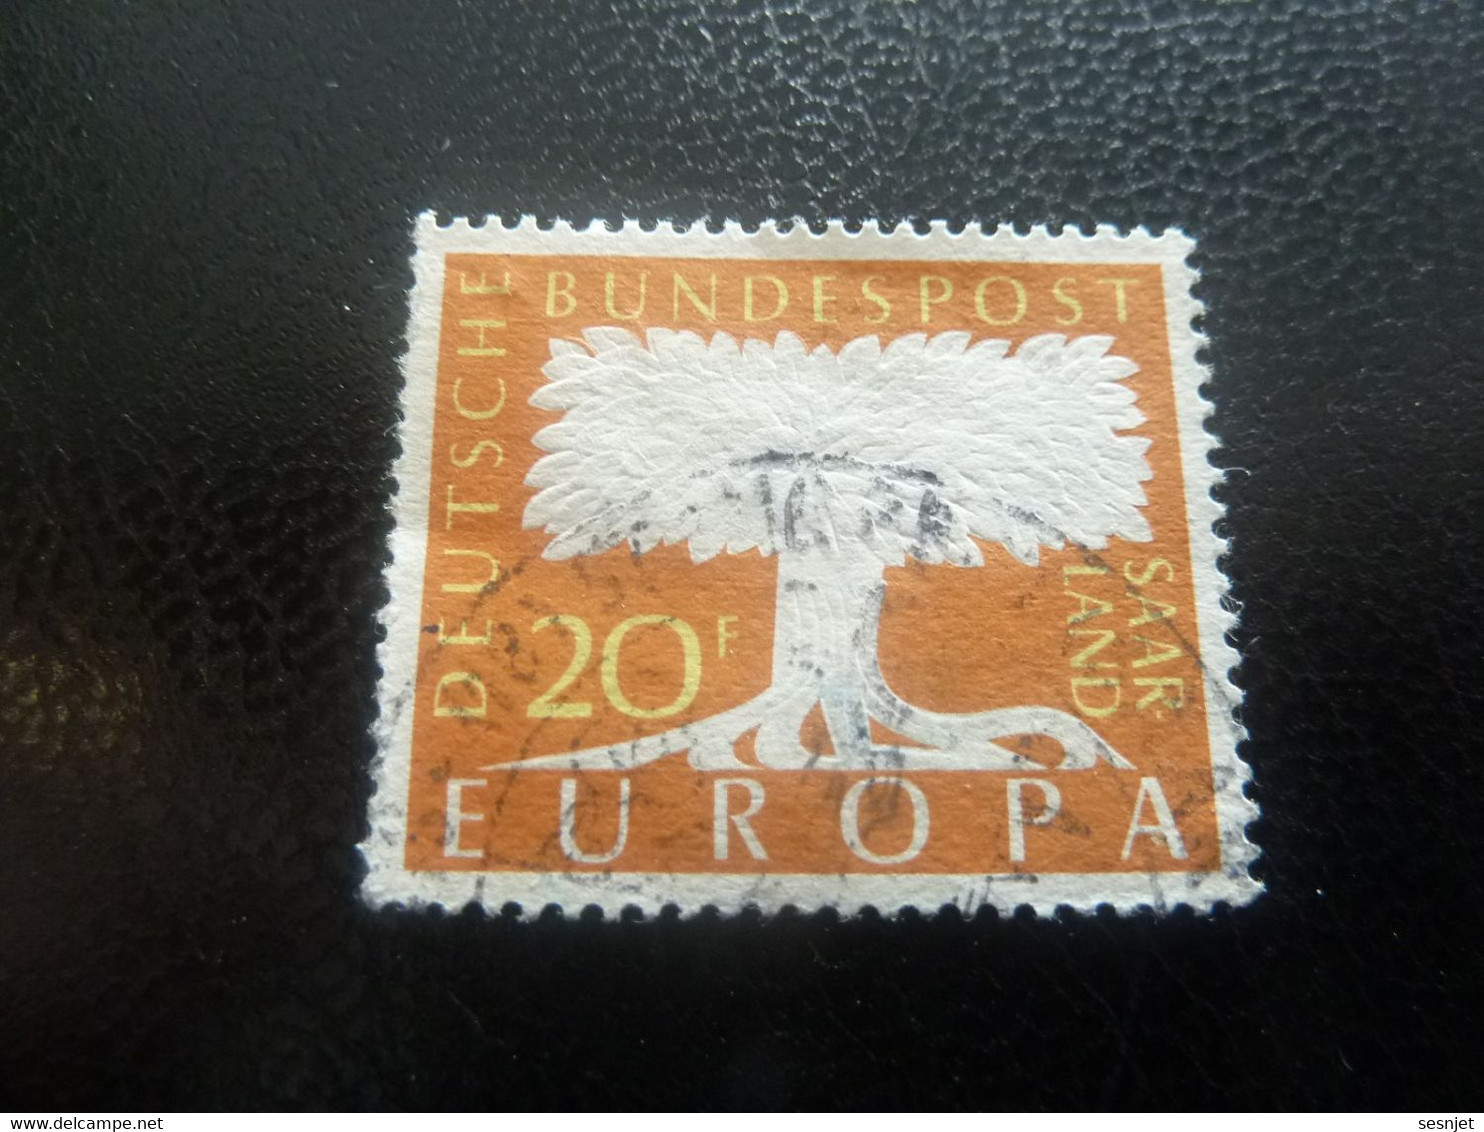 Deutsche Bundespost - Europa - Saar Land - Val 20 F. - Ocre - Oblitéré - Année 1958 - - 1958